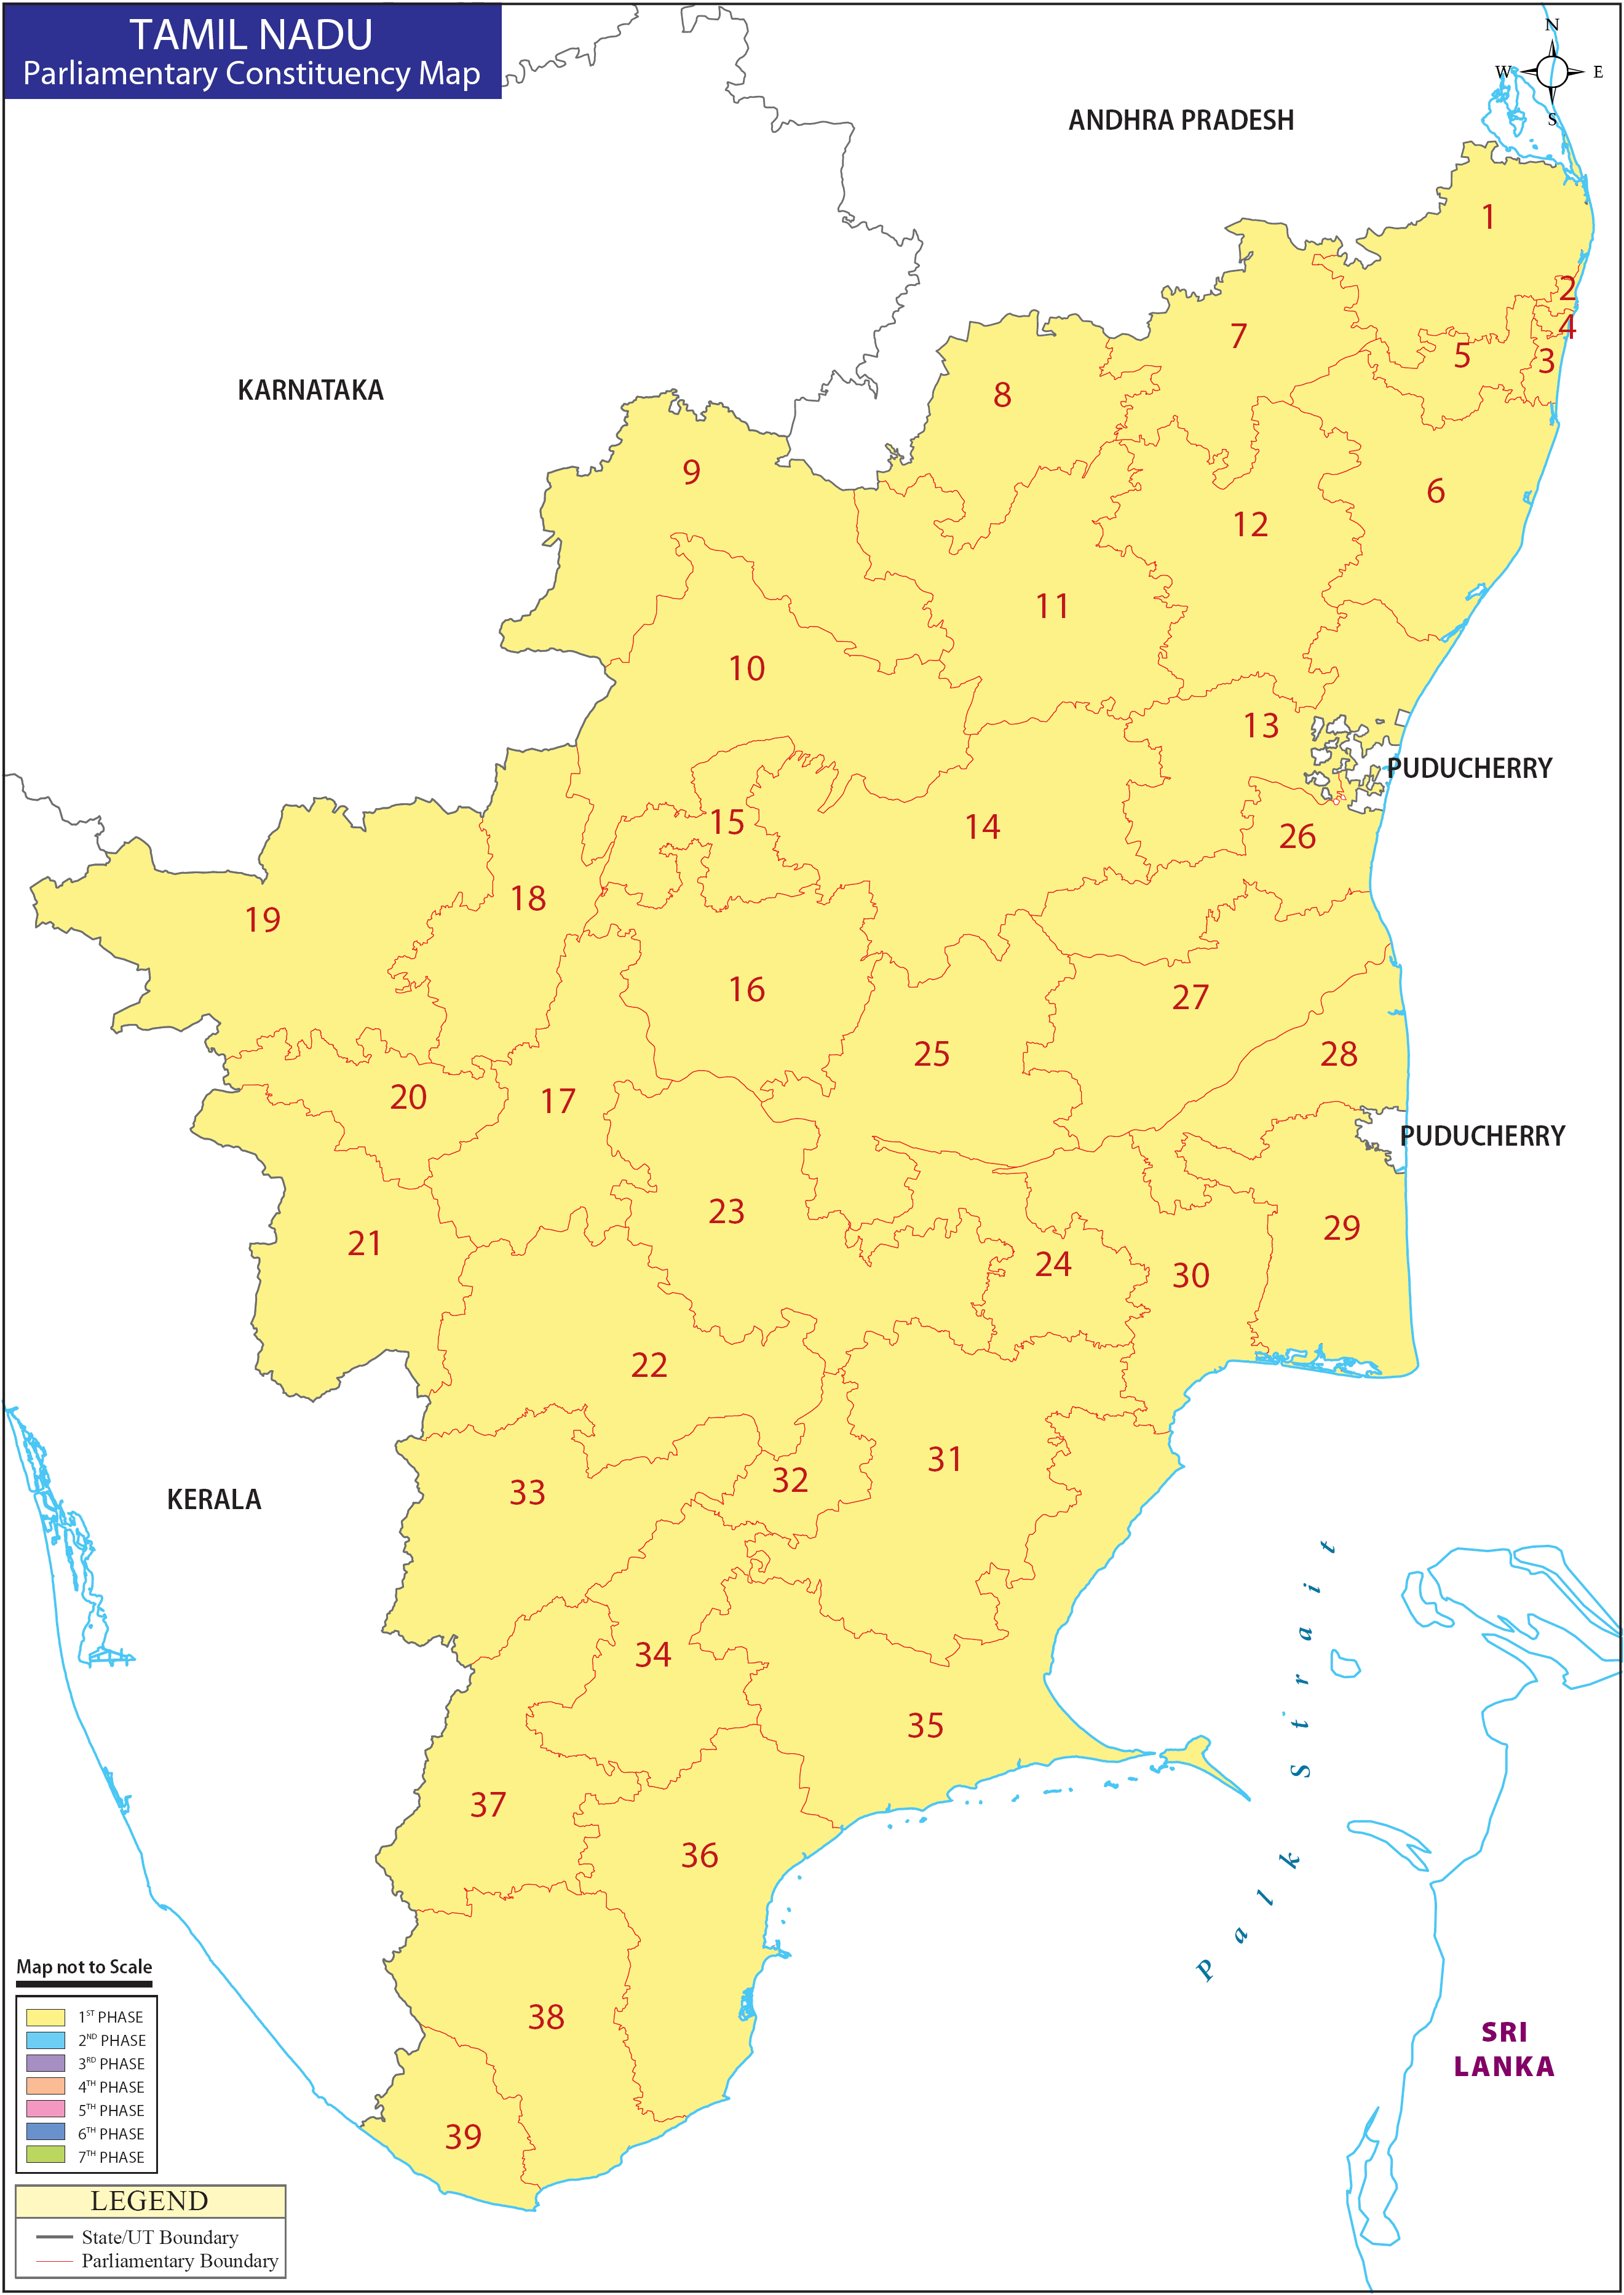 Tamil Nadu Parliamentary Constituency Map